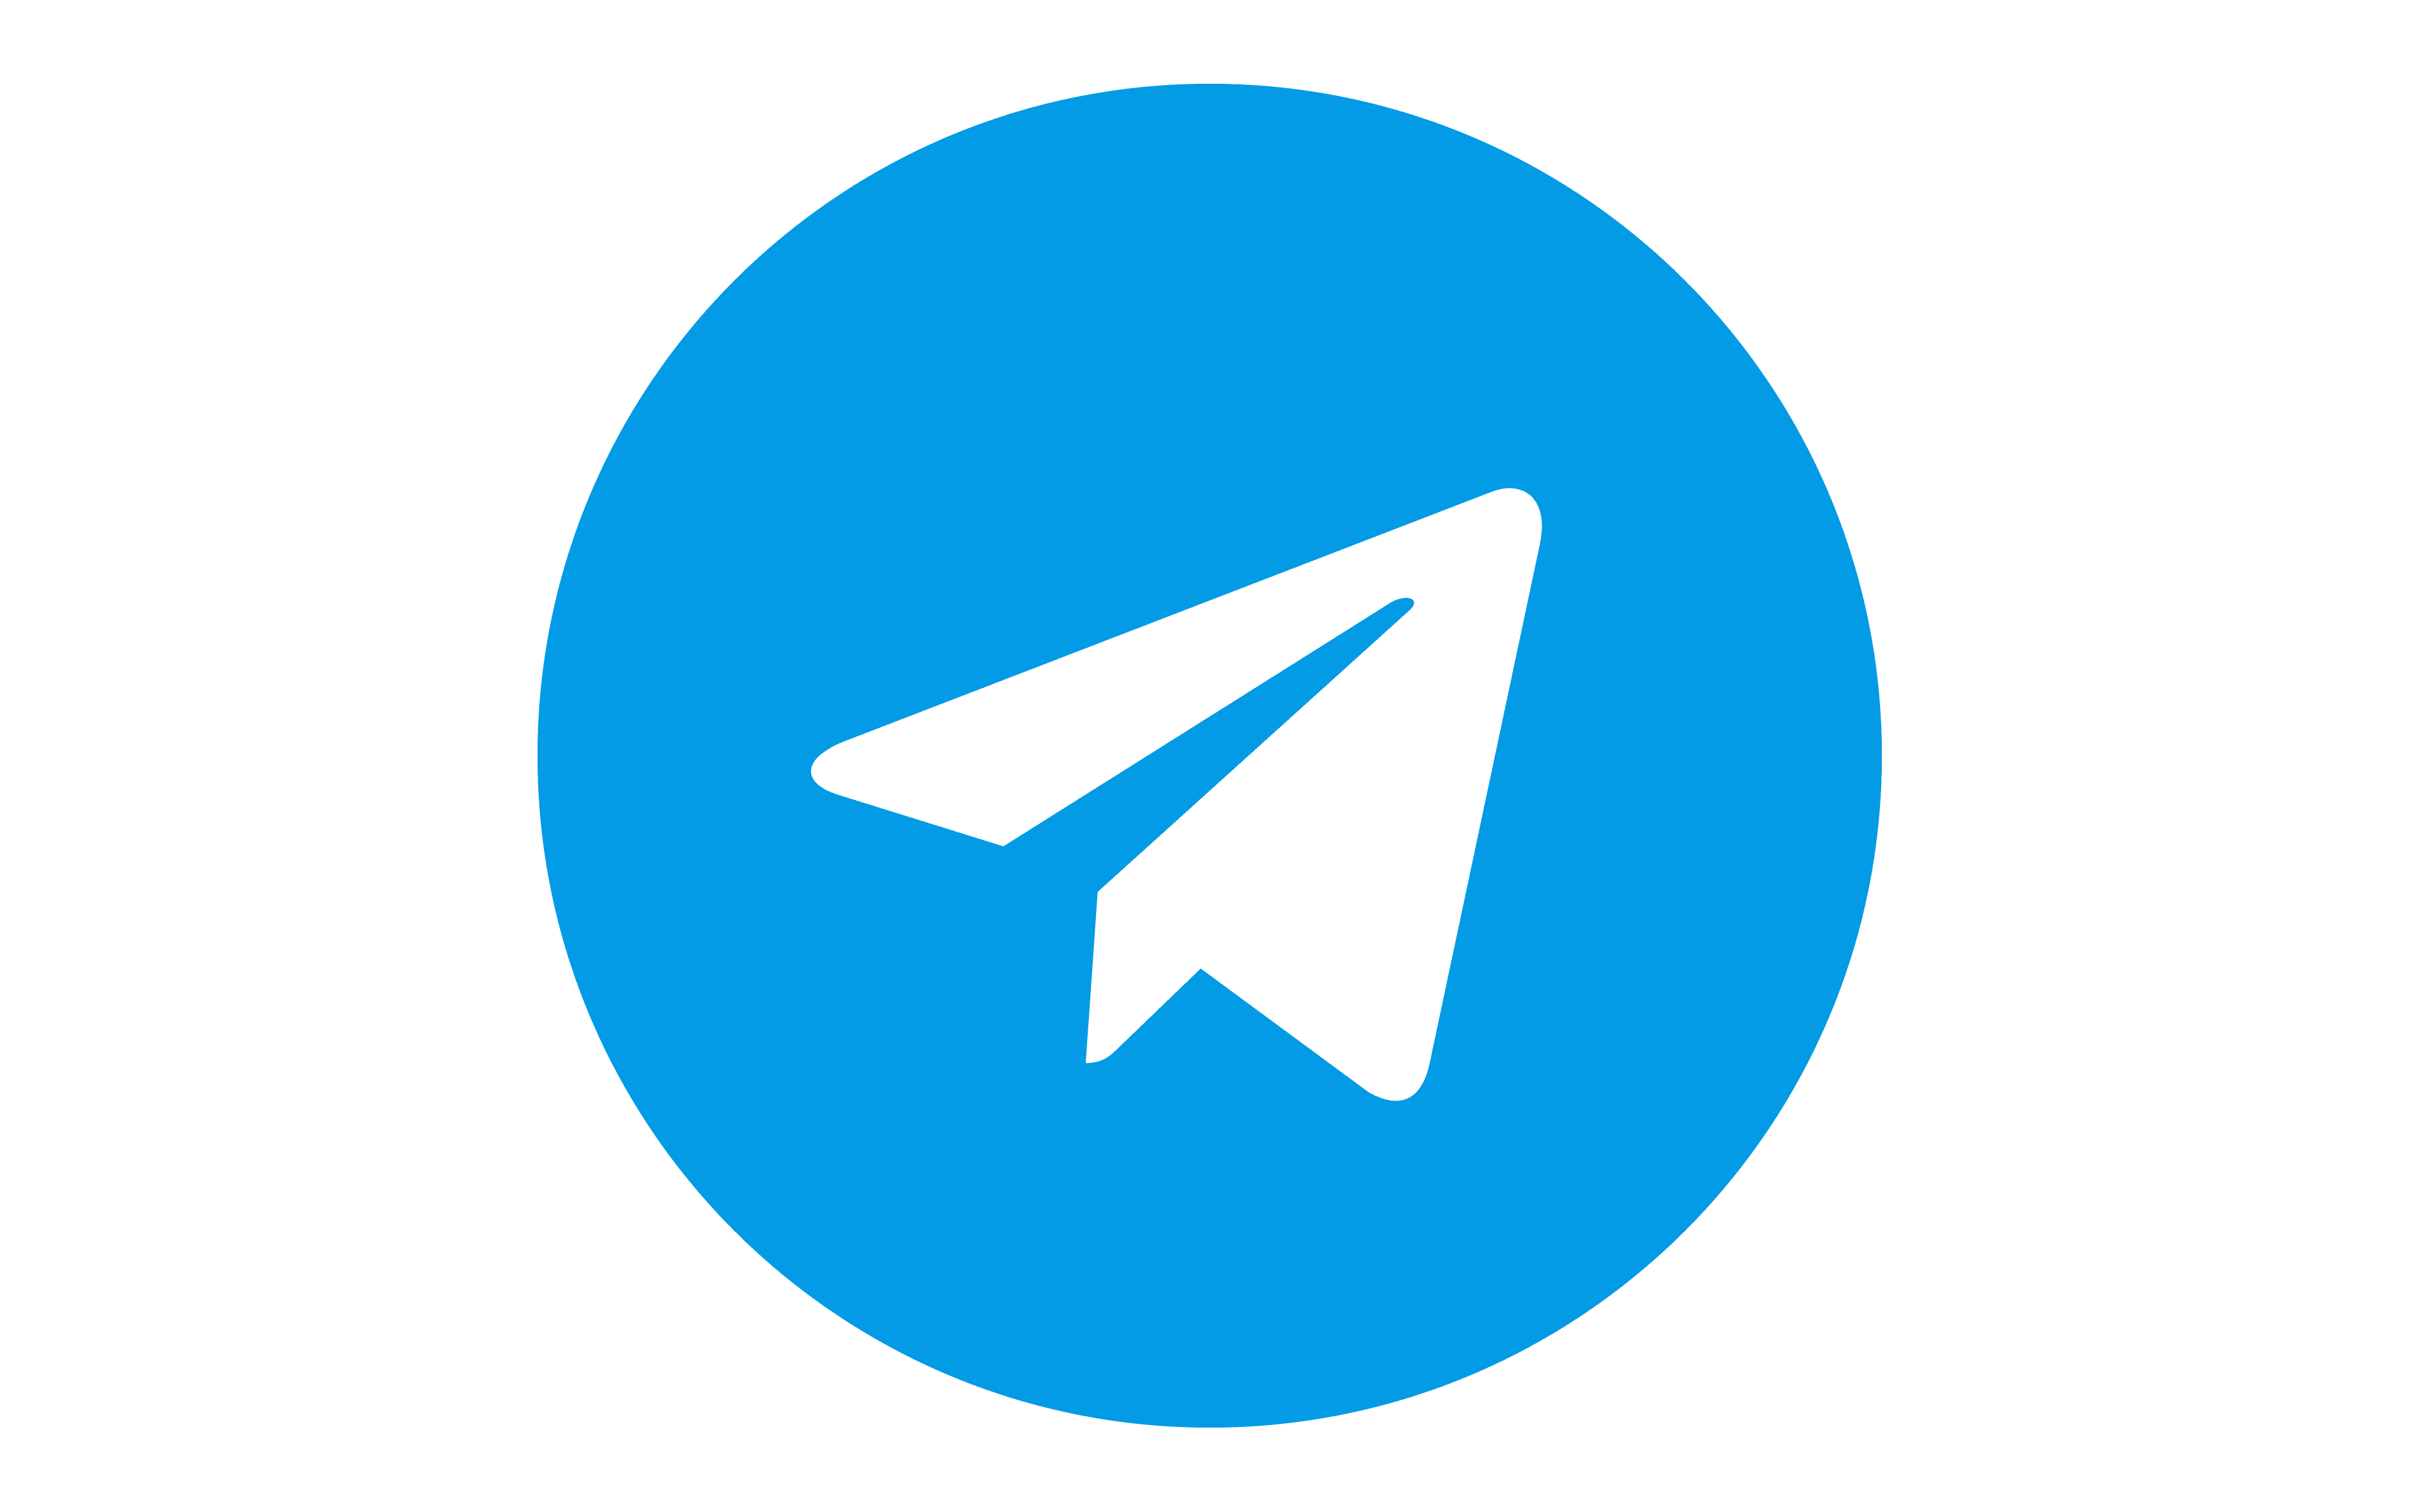 Круглый значок телеграмма. Иконка телеграмм круглая. Логотип телеграм. Логотип телеграмм круглый.